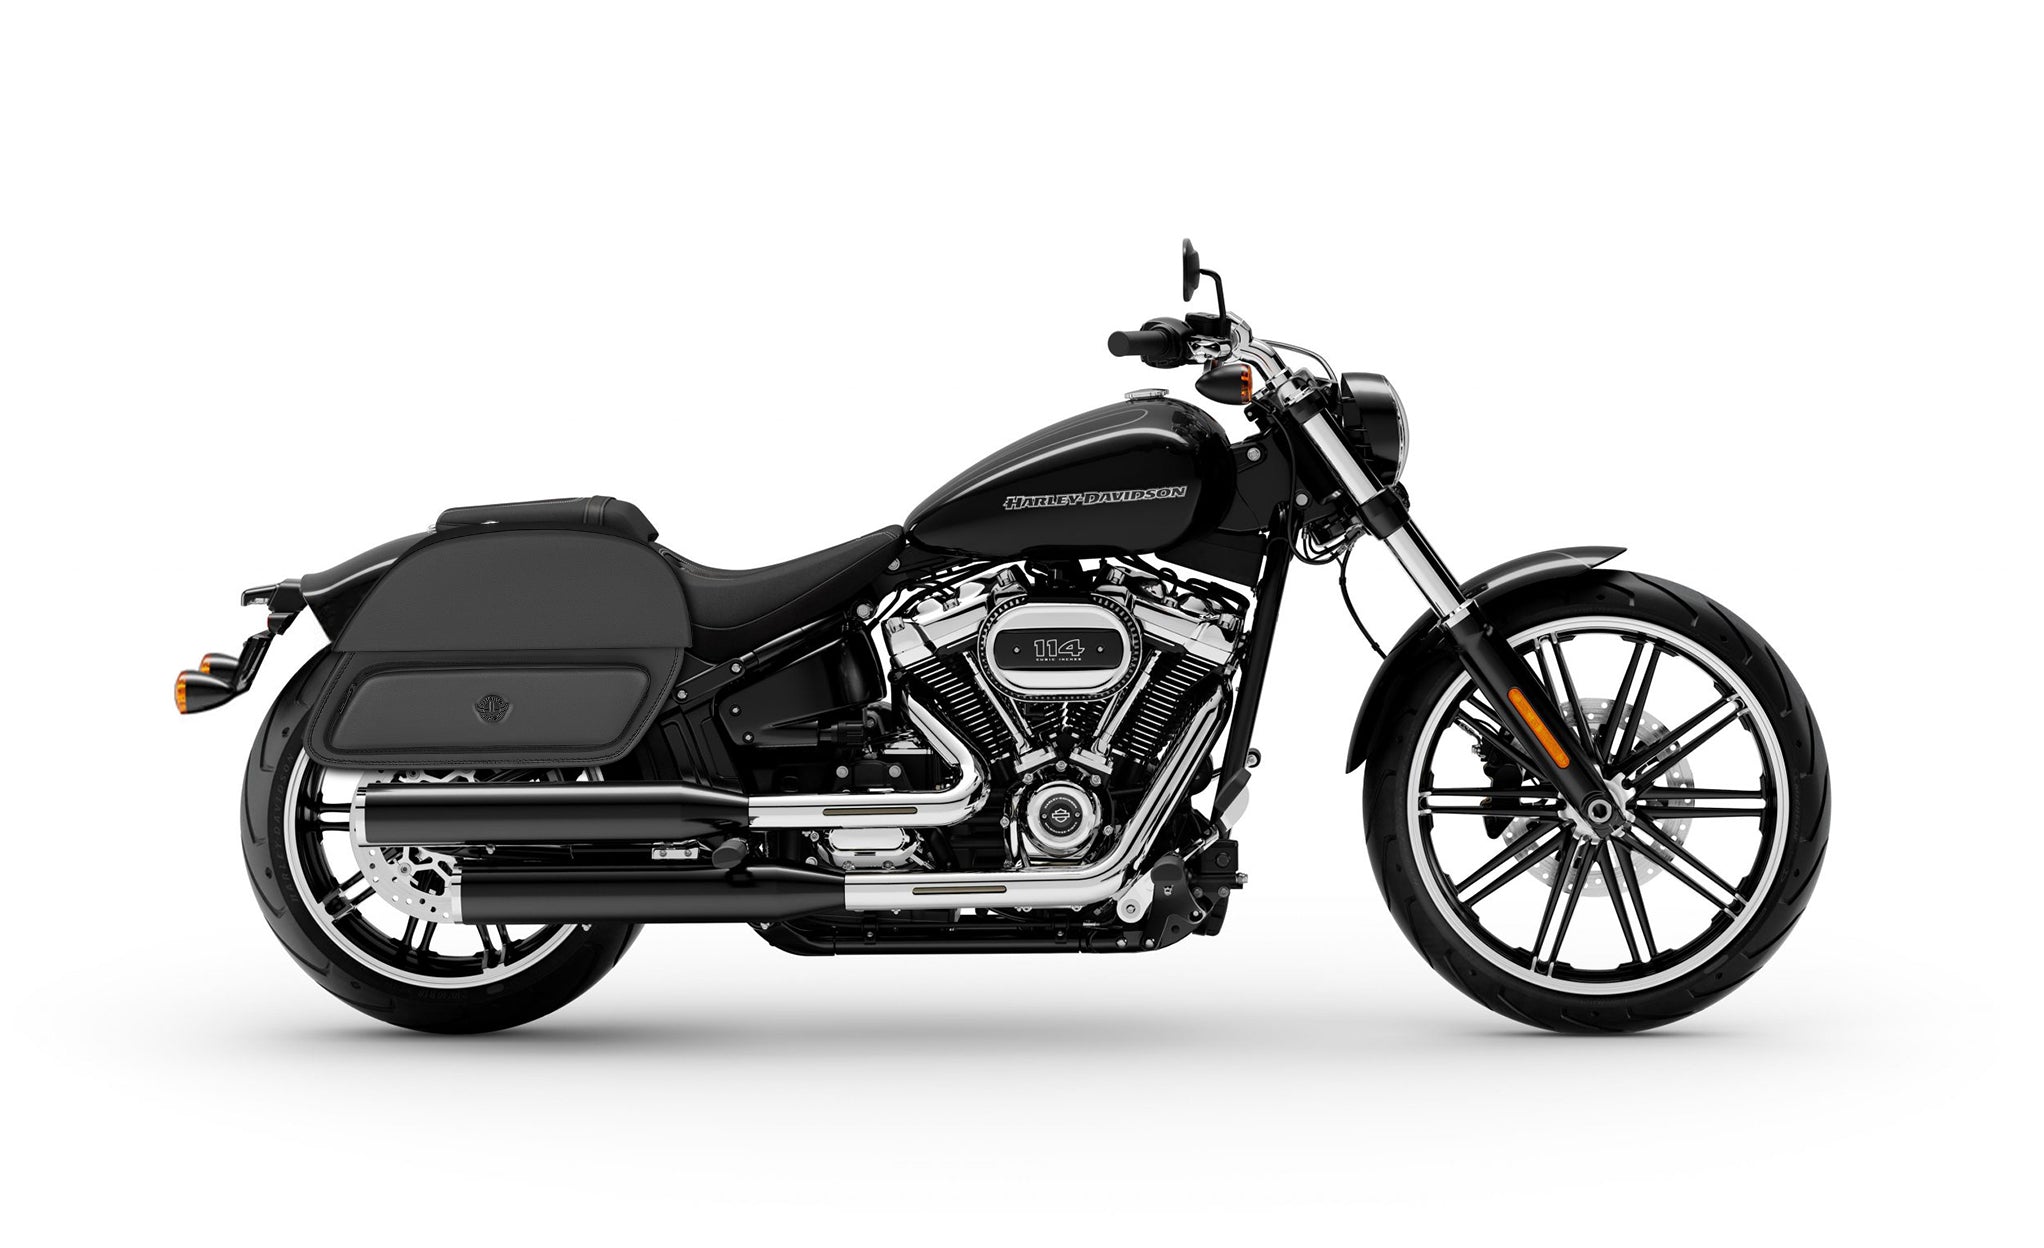 28L - Pantheon Medium Motorcycle Saddlebags for Harley Softail Breakout 114 FXBR/S on Bike Photo @expand